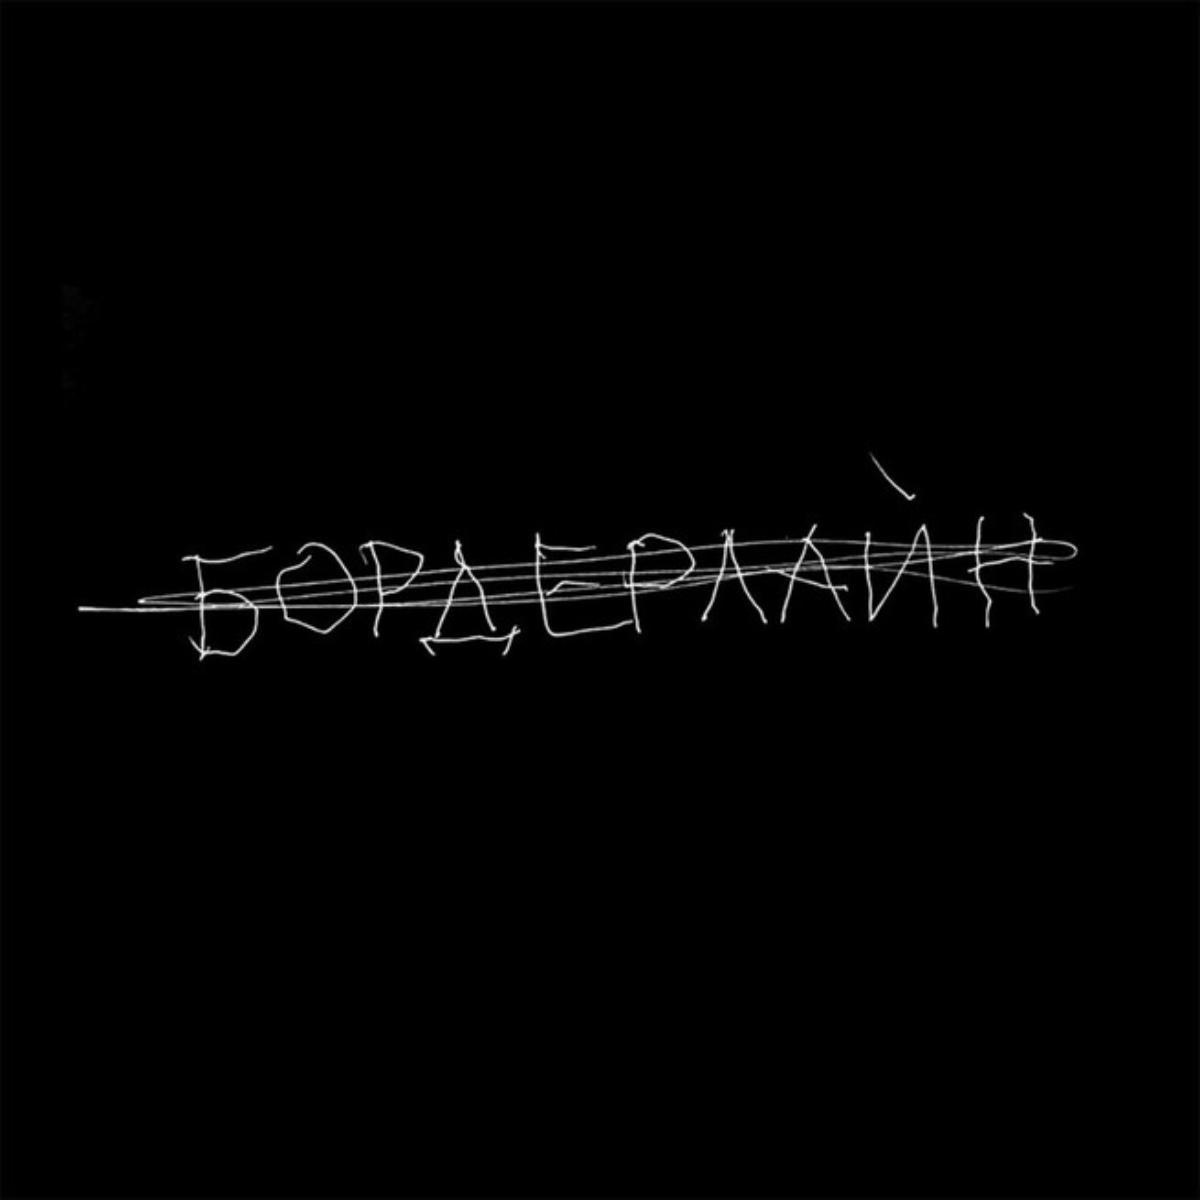 Бордерлайн (2021) – Земфира – обложка альбома